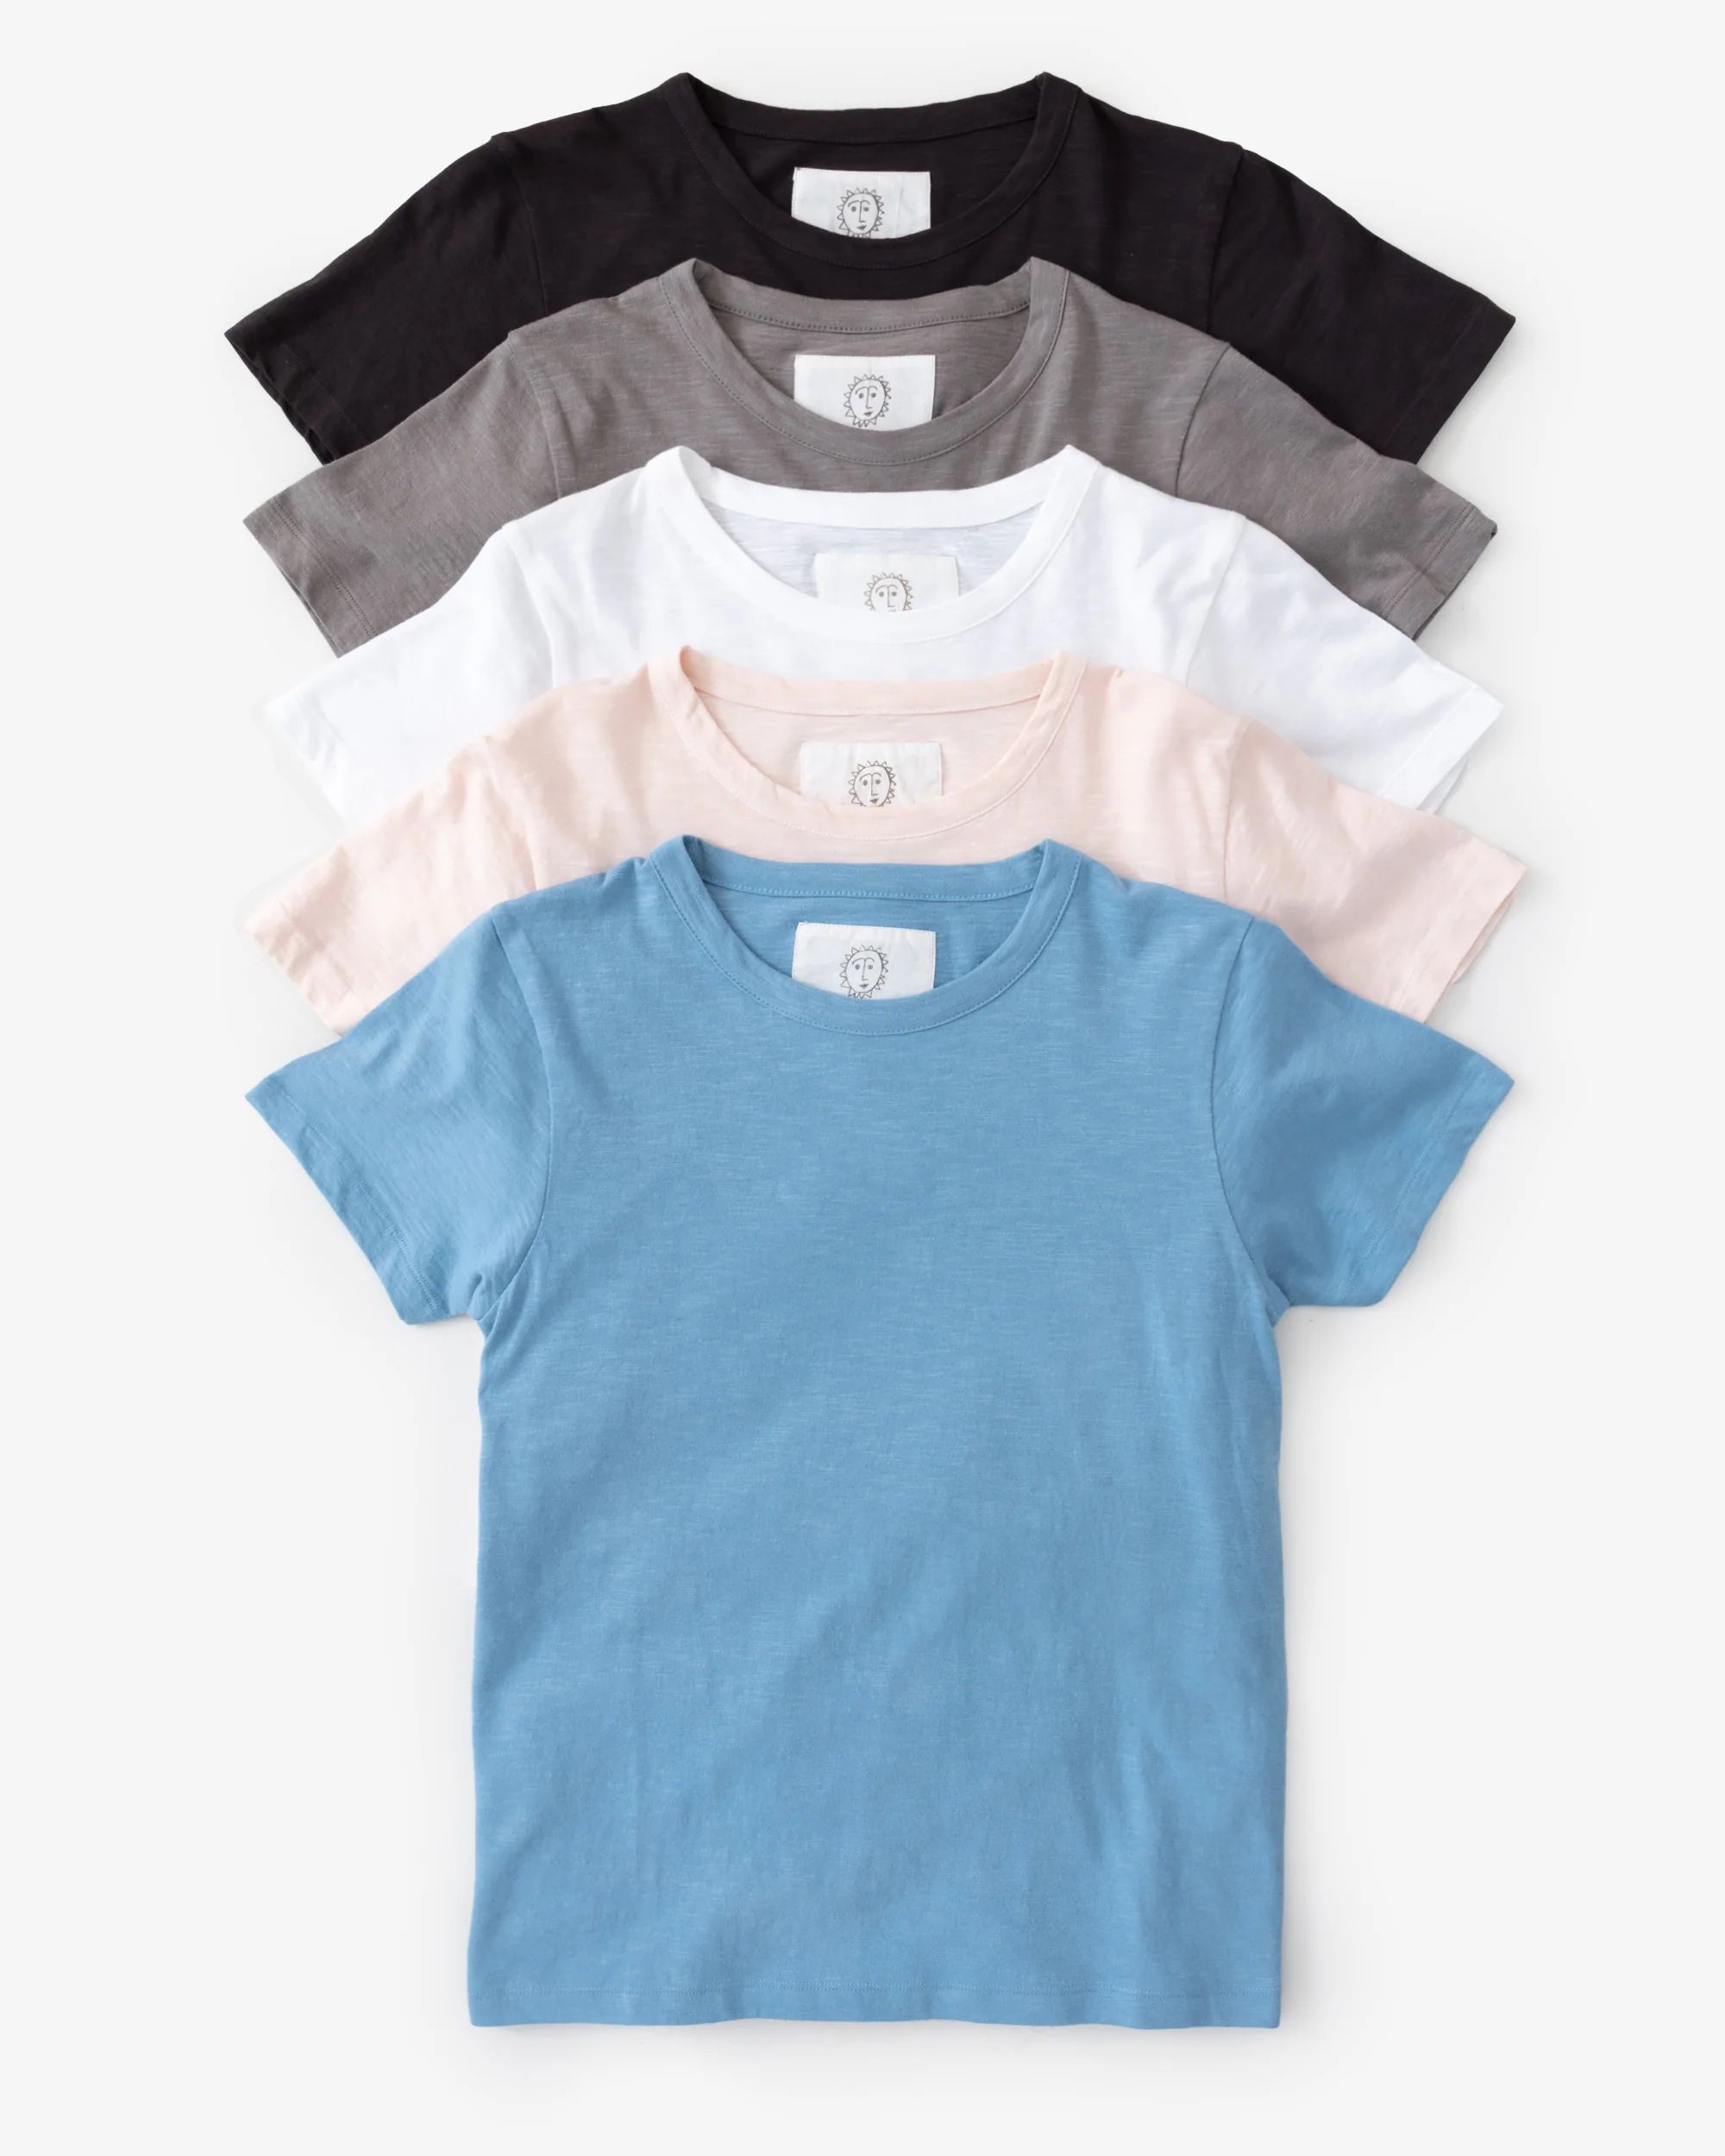 Saturday Tee - Knit T-Shirt 5-Pack - Black/Pebble/Cloud/Sky Blue/Blush | Printfresh